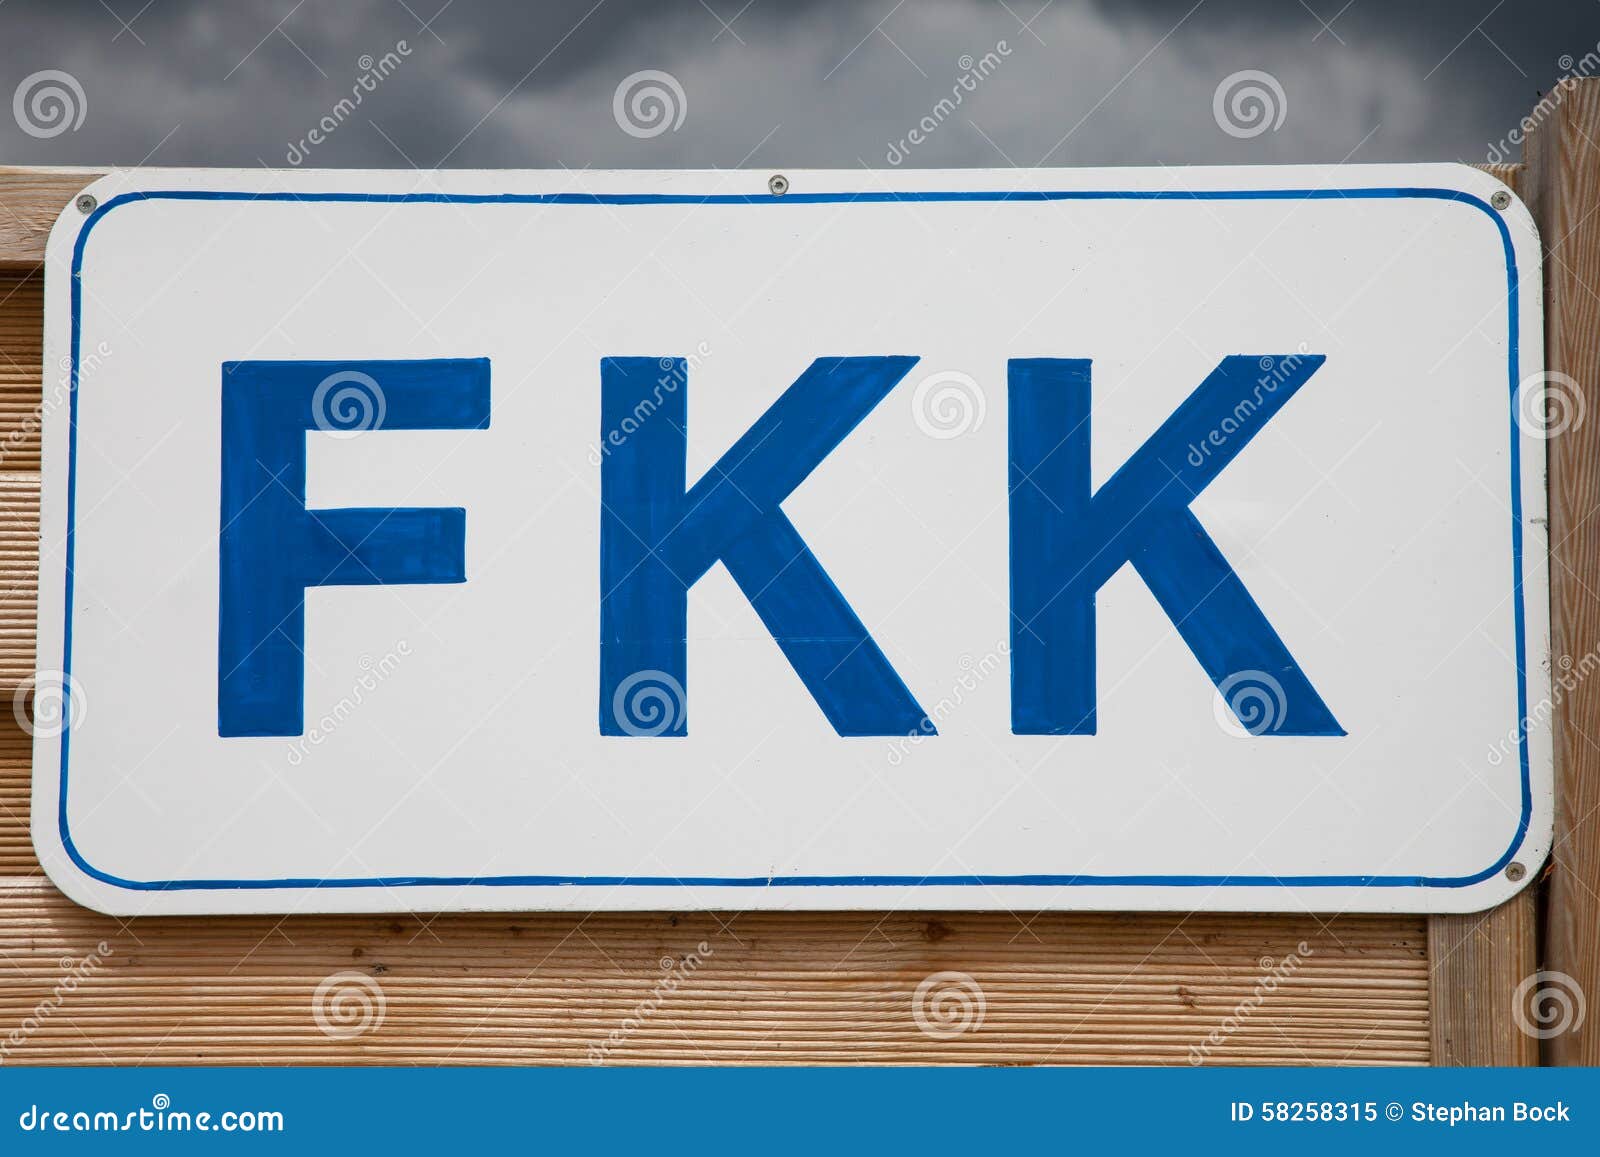 Germany, Sign FKK At Beach Stock Photo - Image: 58258315